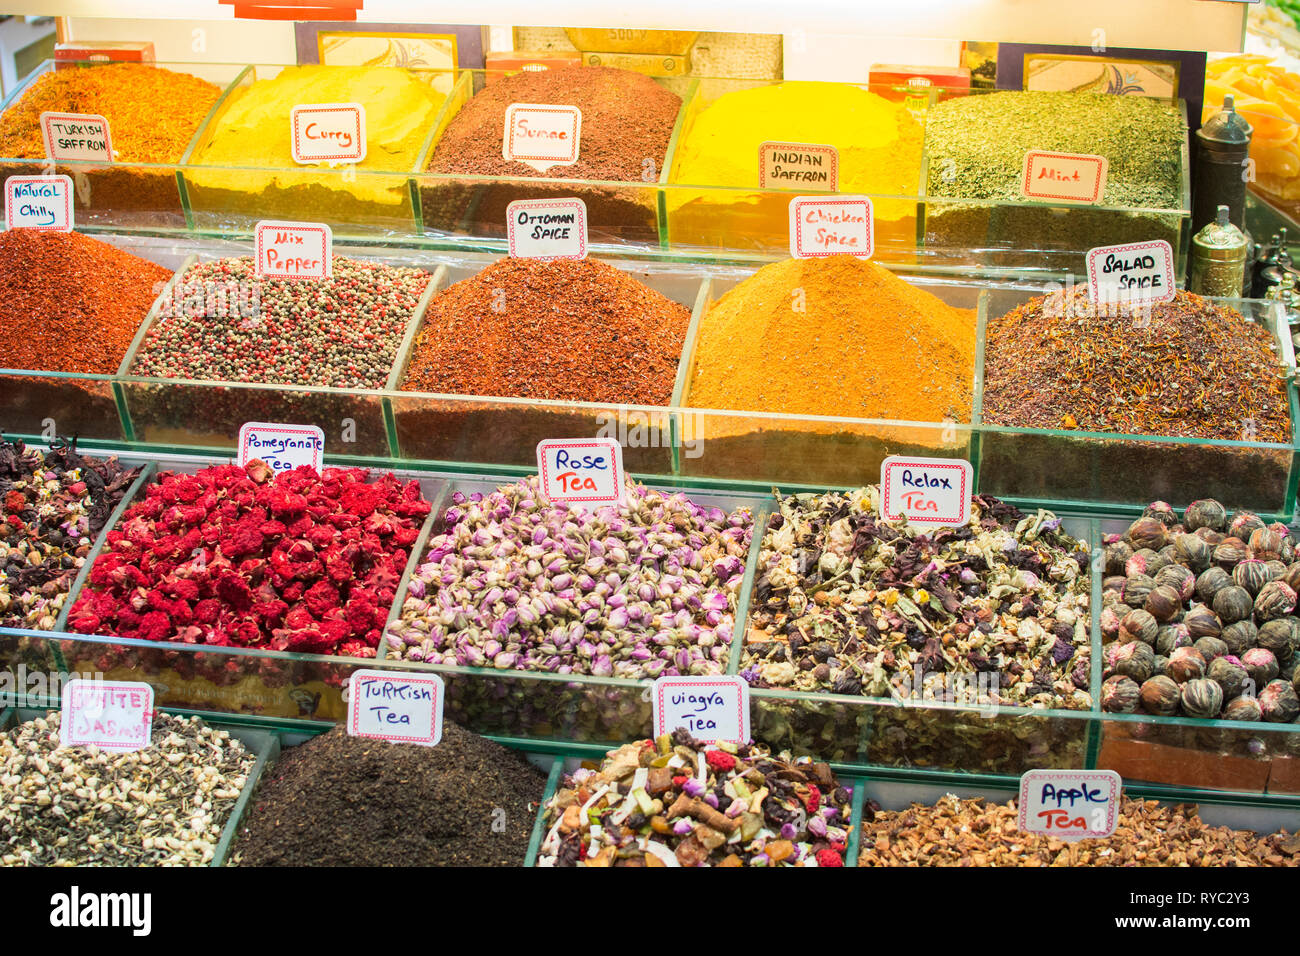 Spice shop at Eminonu market Istanbul Turkey Stock Photo